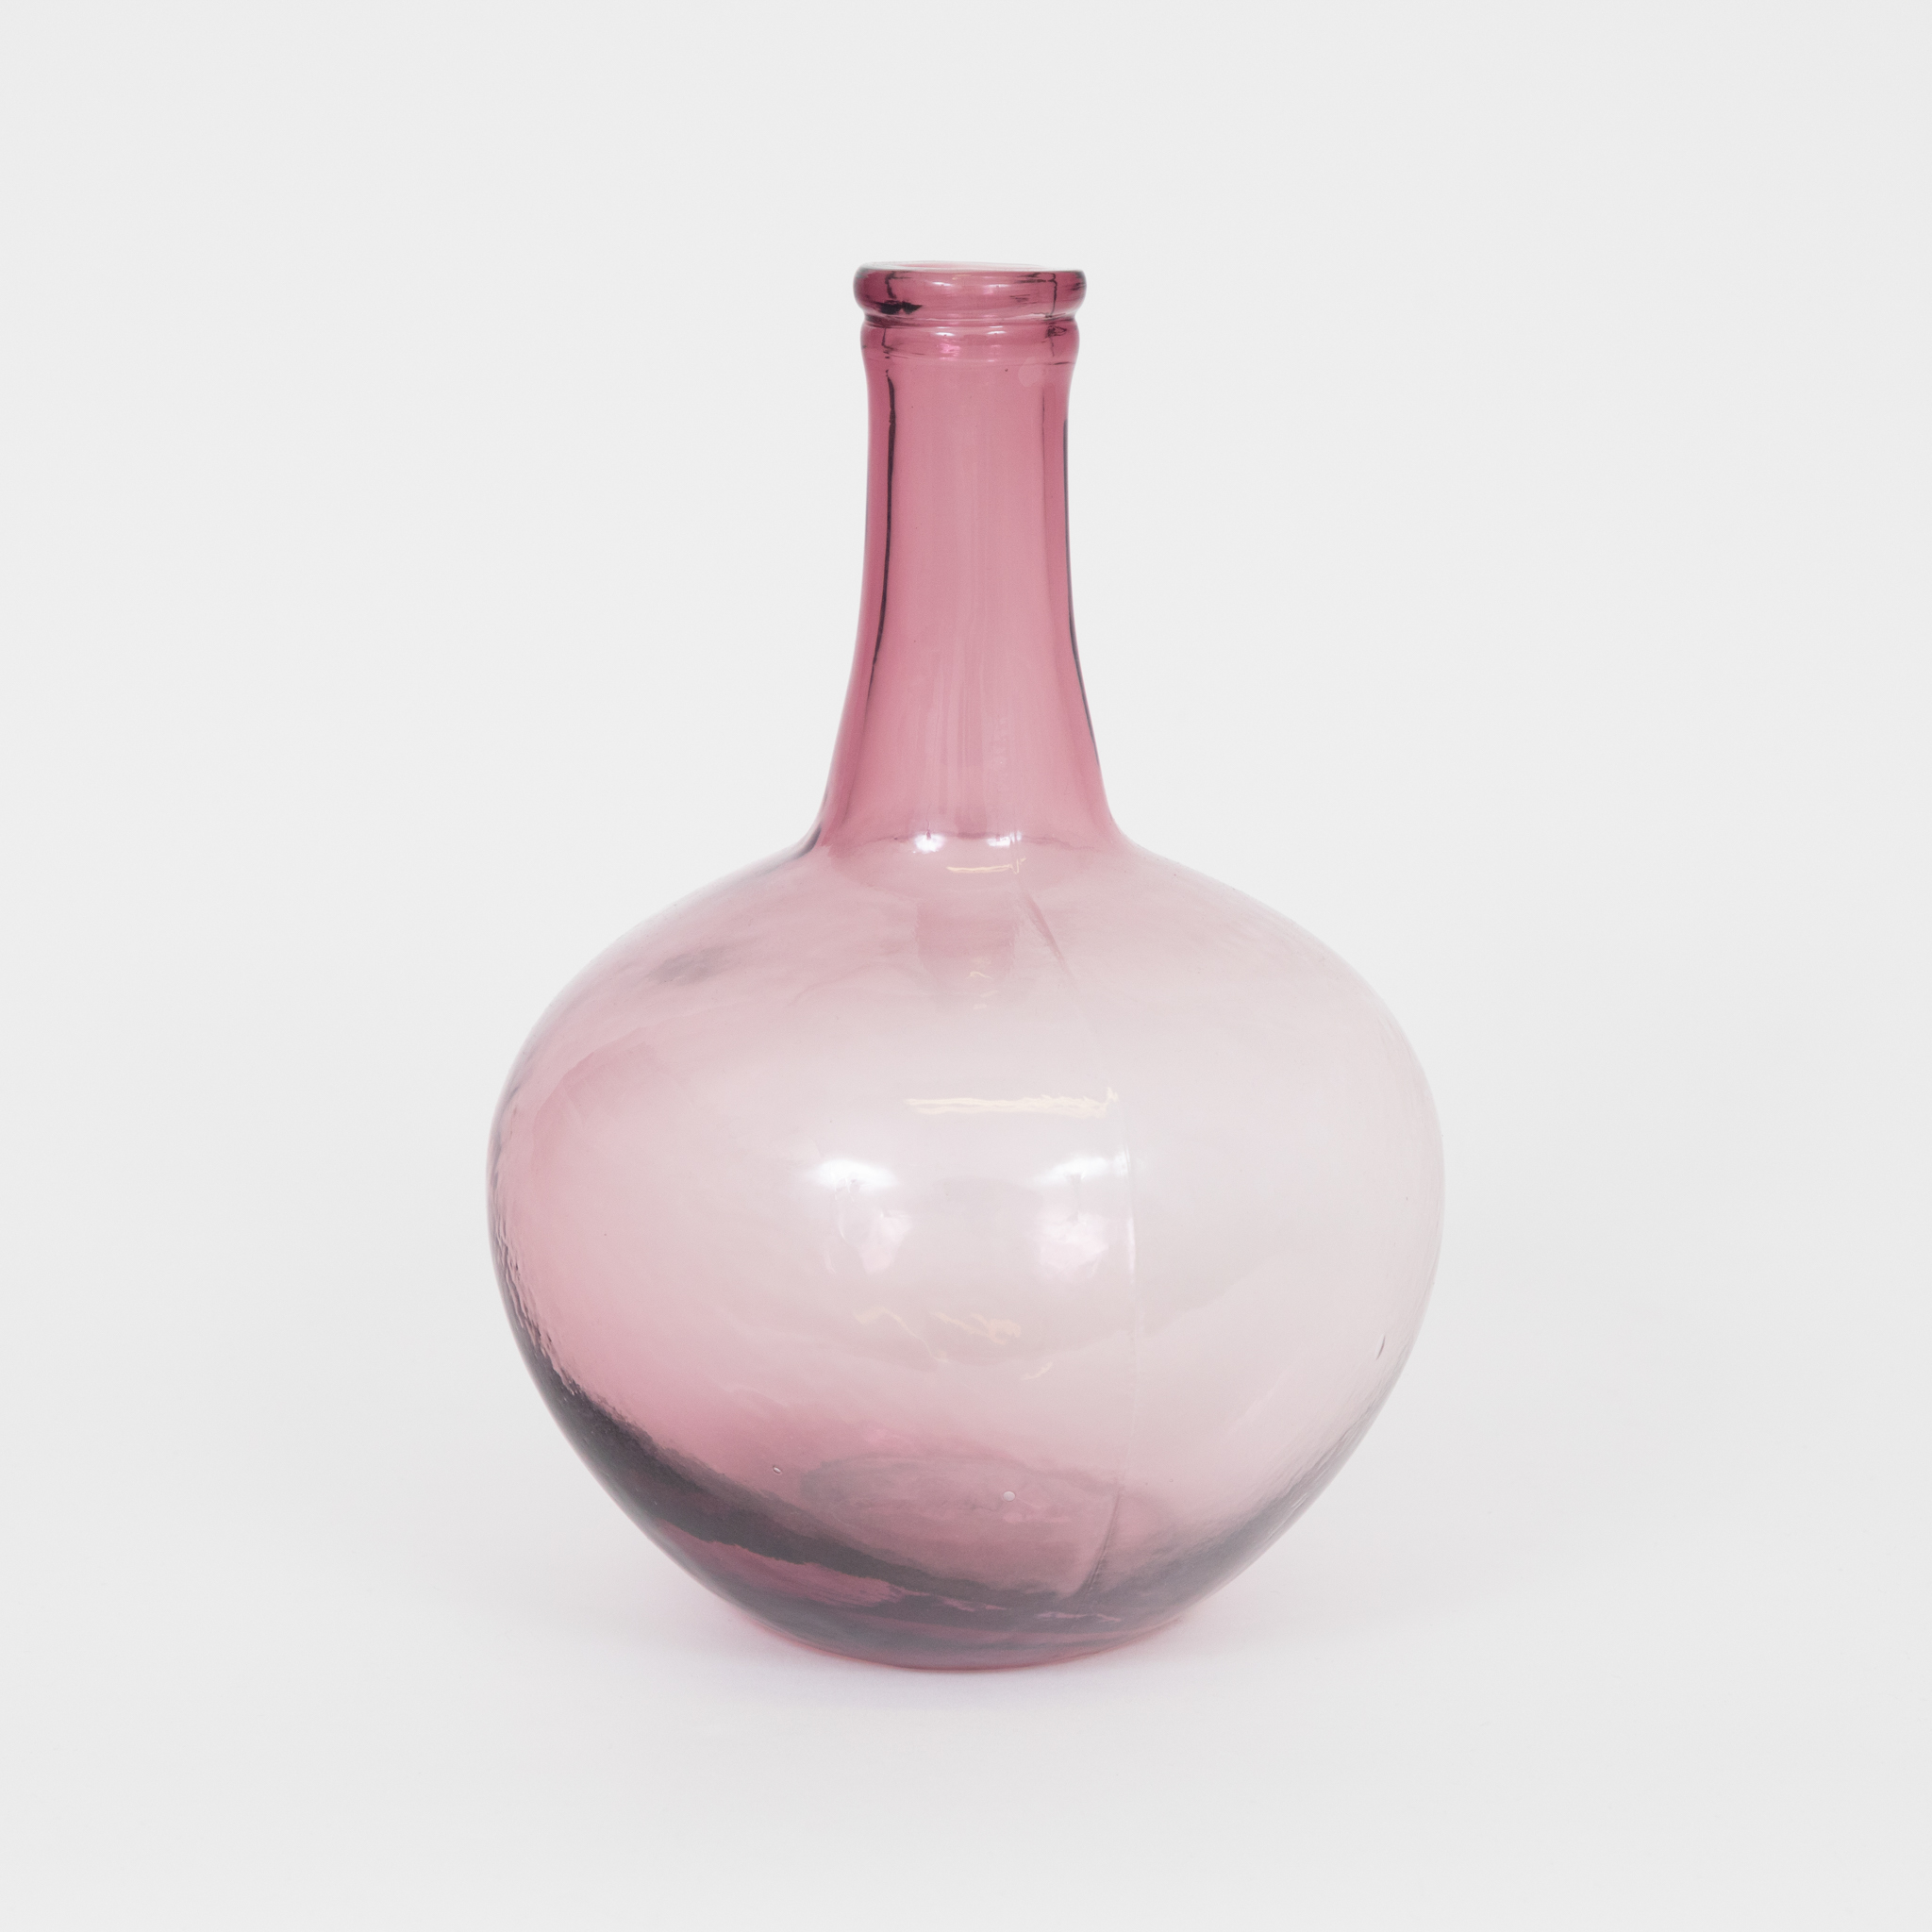 Ib Laursen Red Glass Balloon Vase Handblown